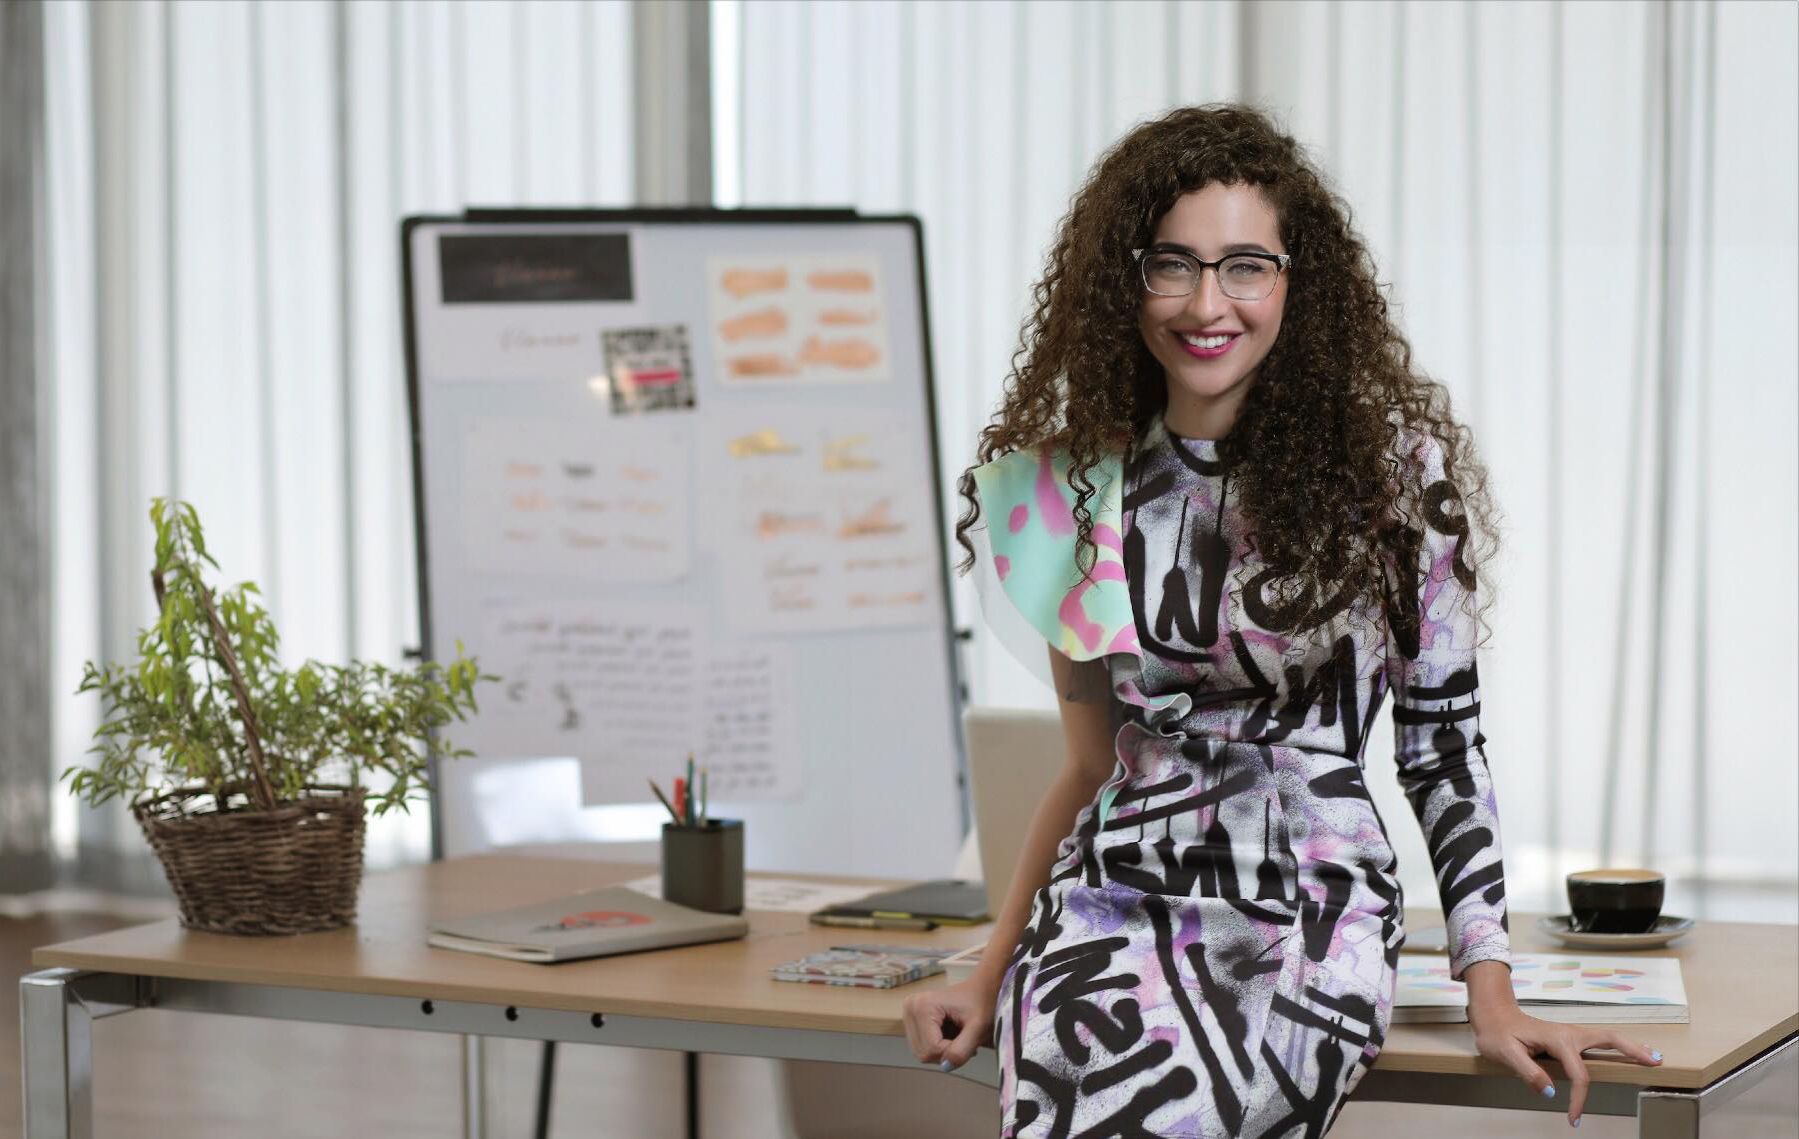 Ghada Wali, an award-winning Egyptian graphic designer who has created an Arabic learning tool